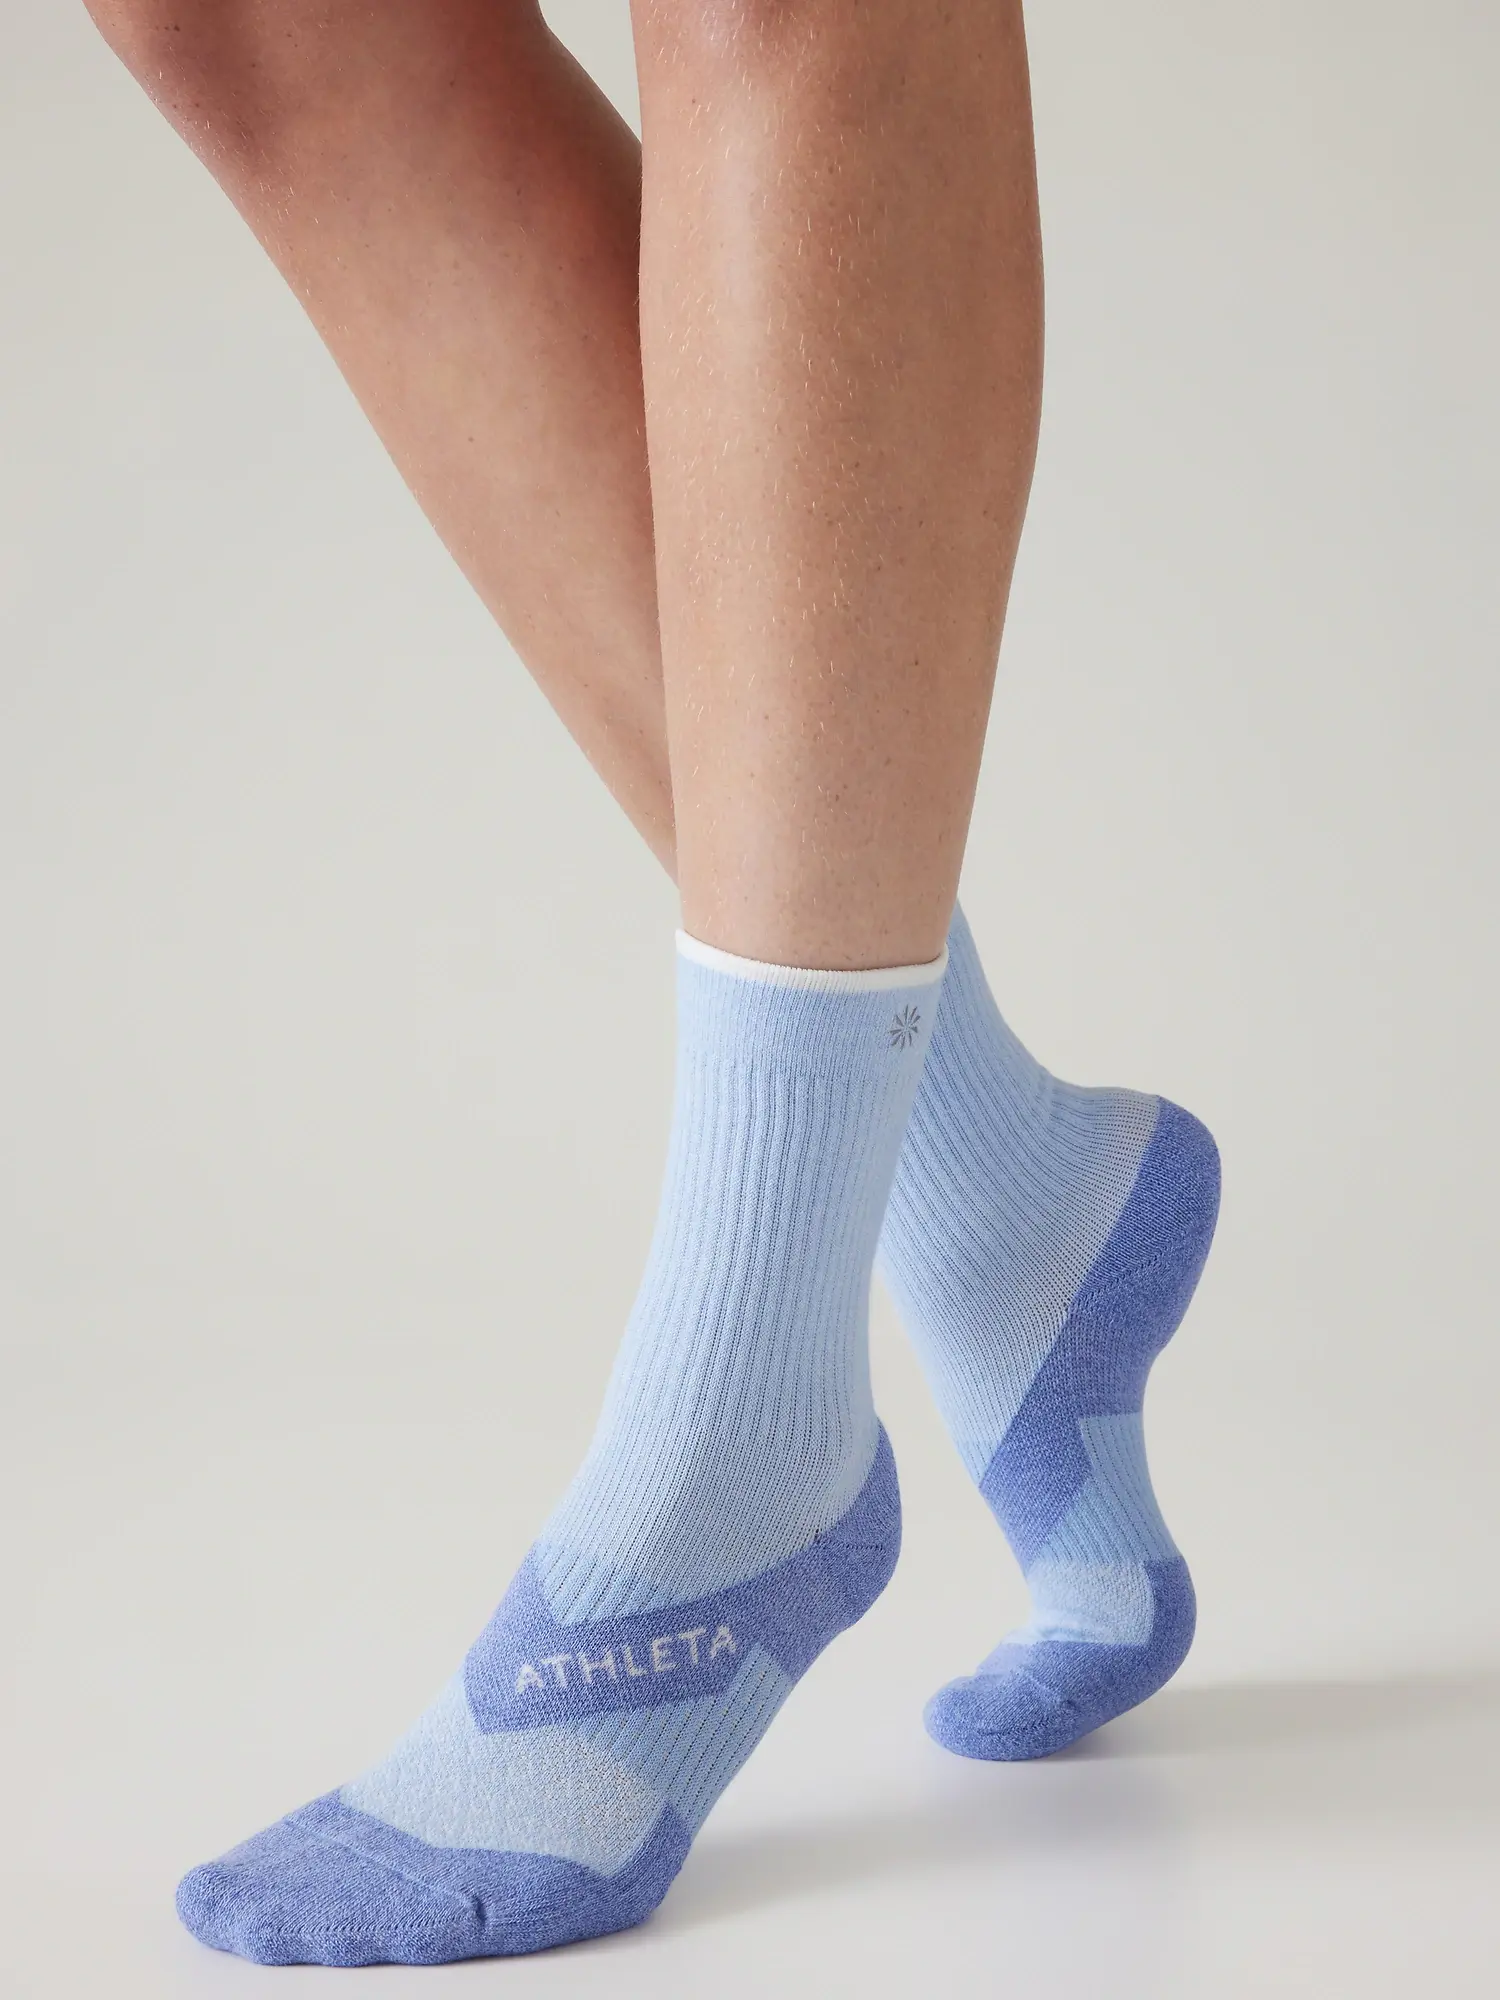 Athleta Performance Crew Sock blue. 1